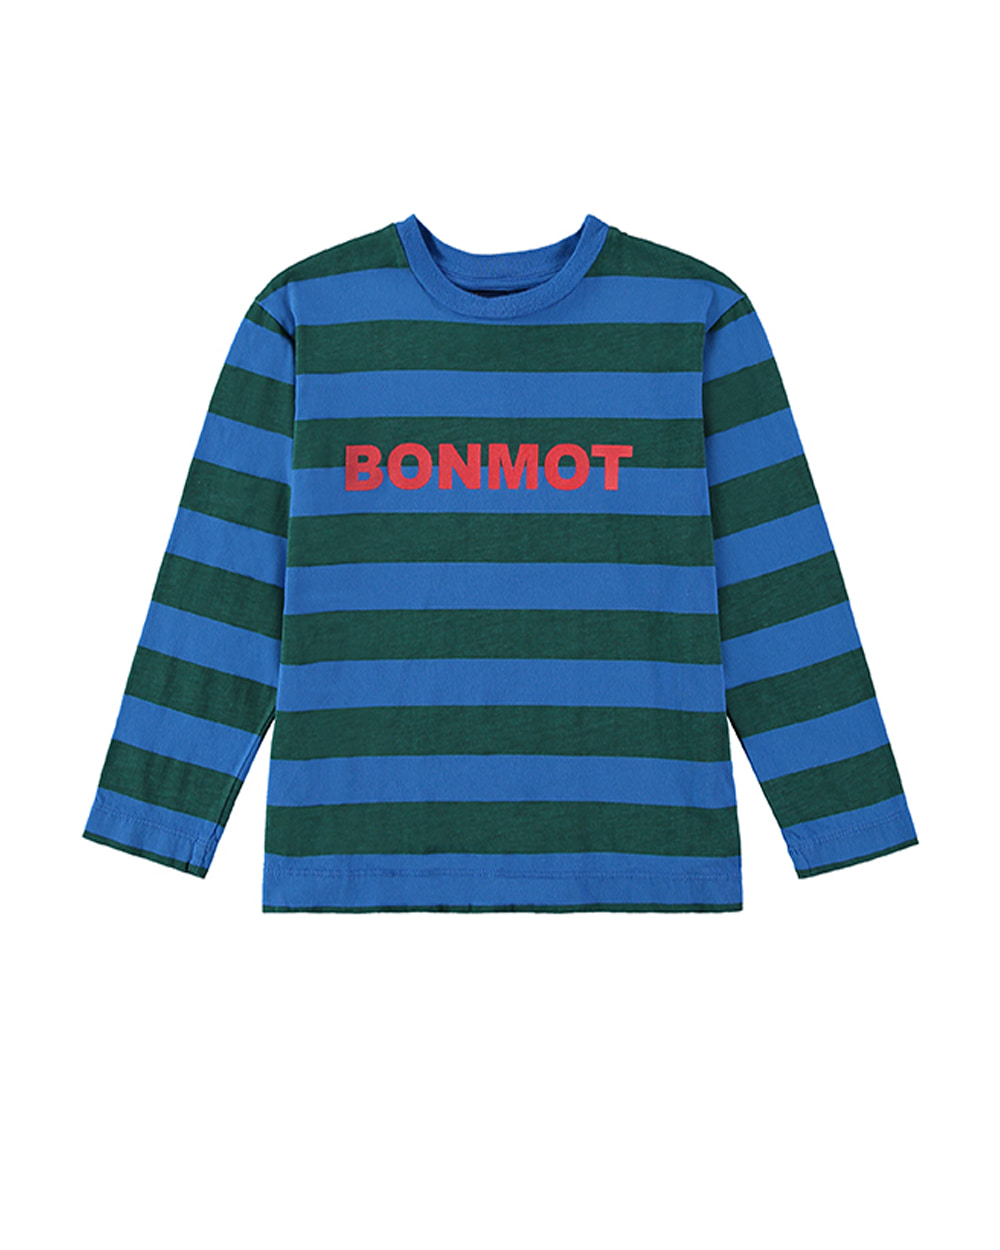 [BONMOT]T-shirt bonmot stripes /Sea blue [8-9Y]